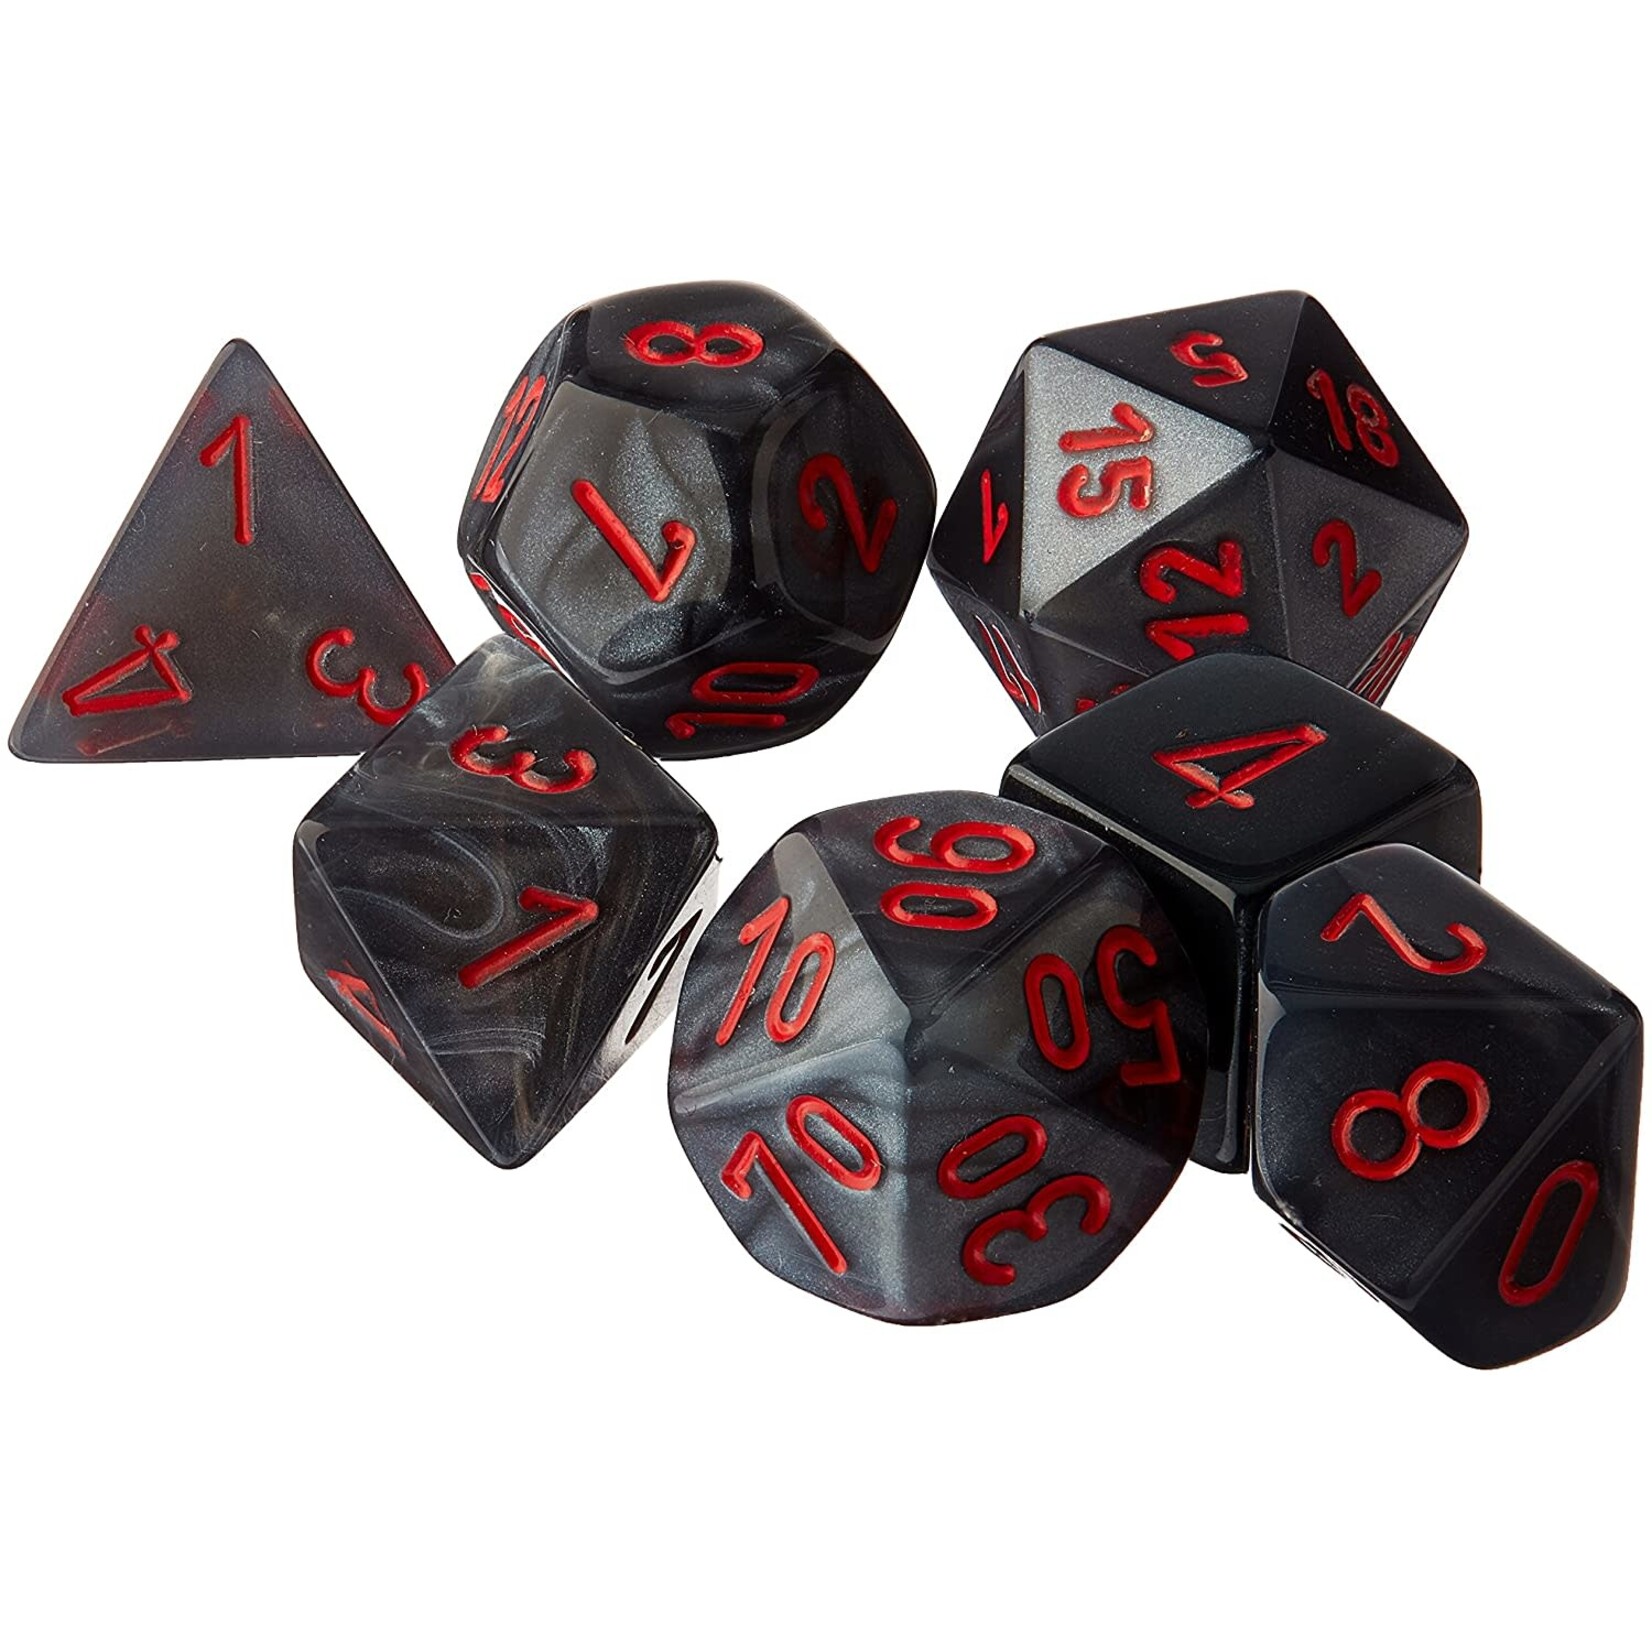 Chessex Velvet Black/red Polyhedral 7-Dice Set